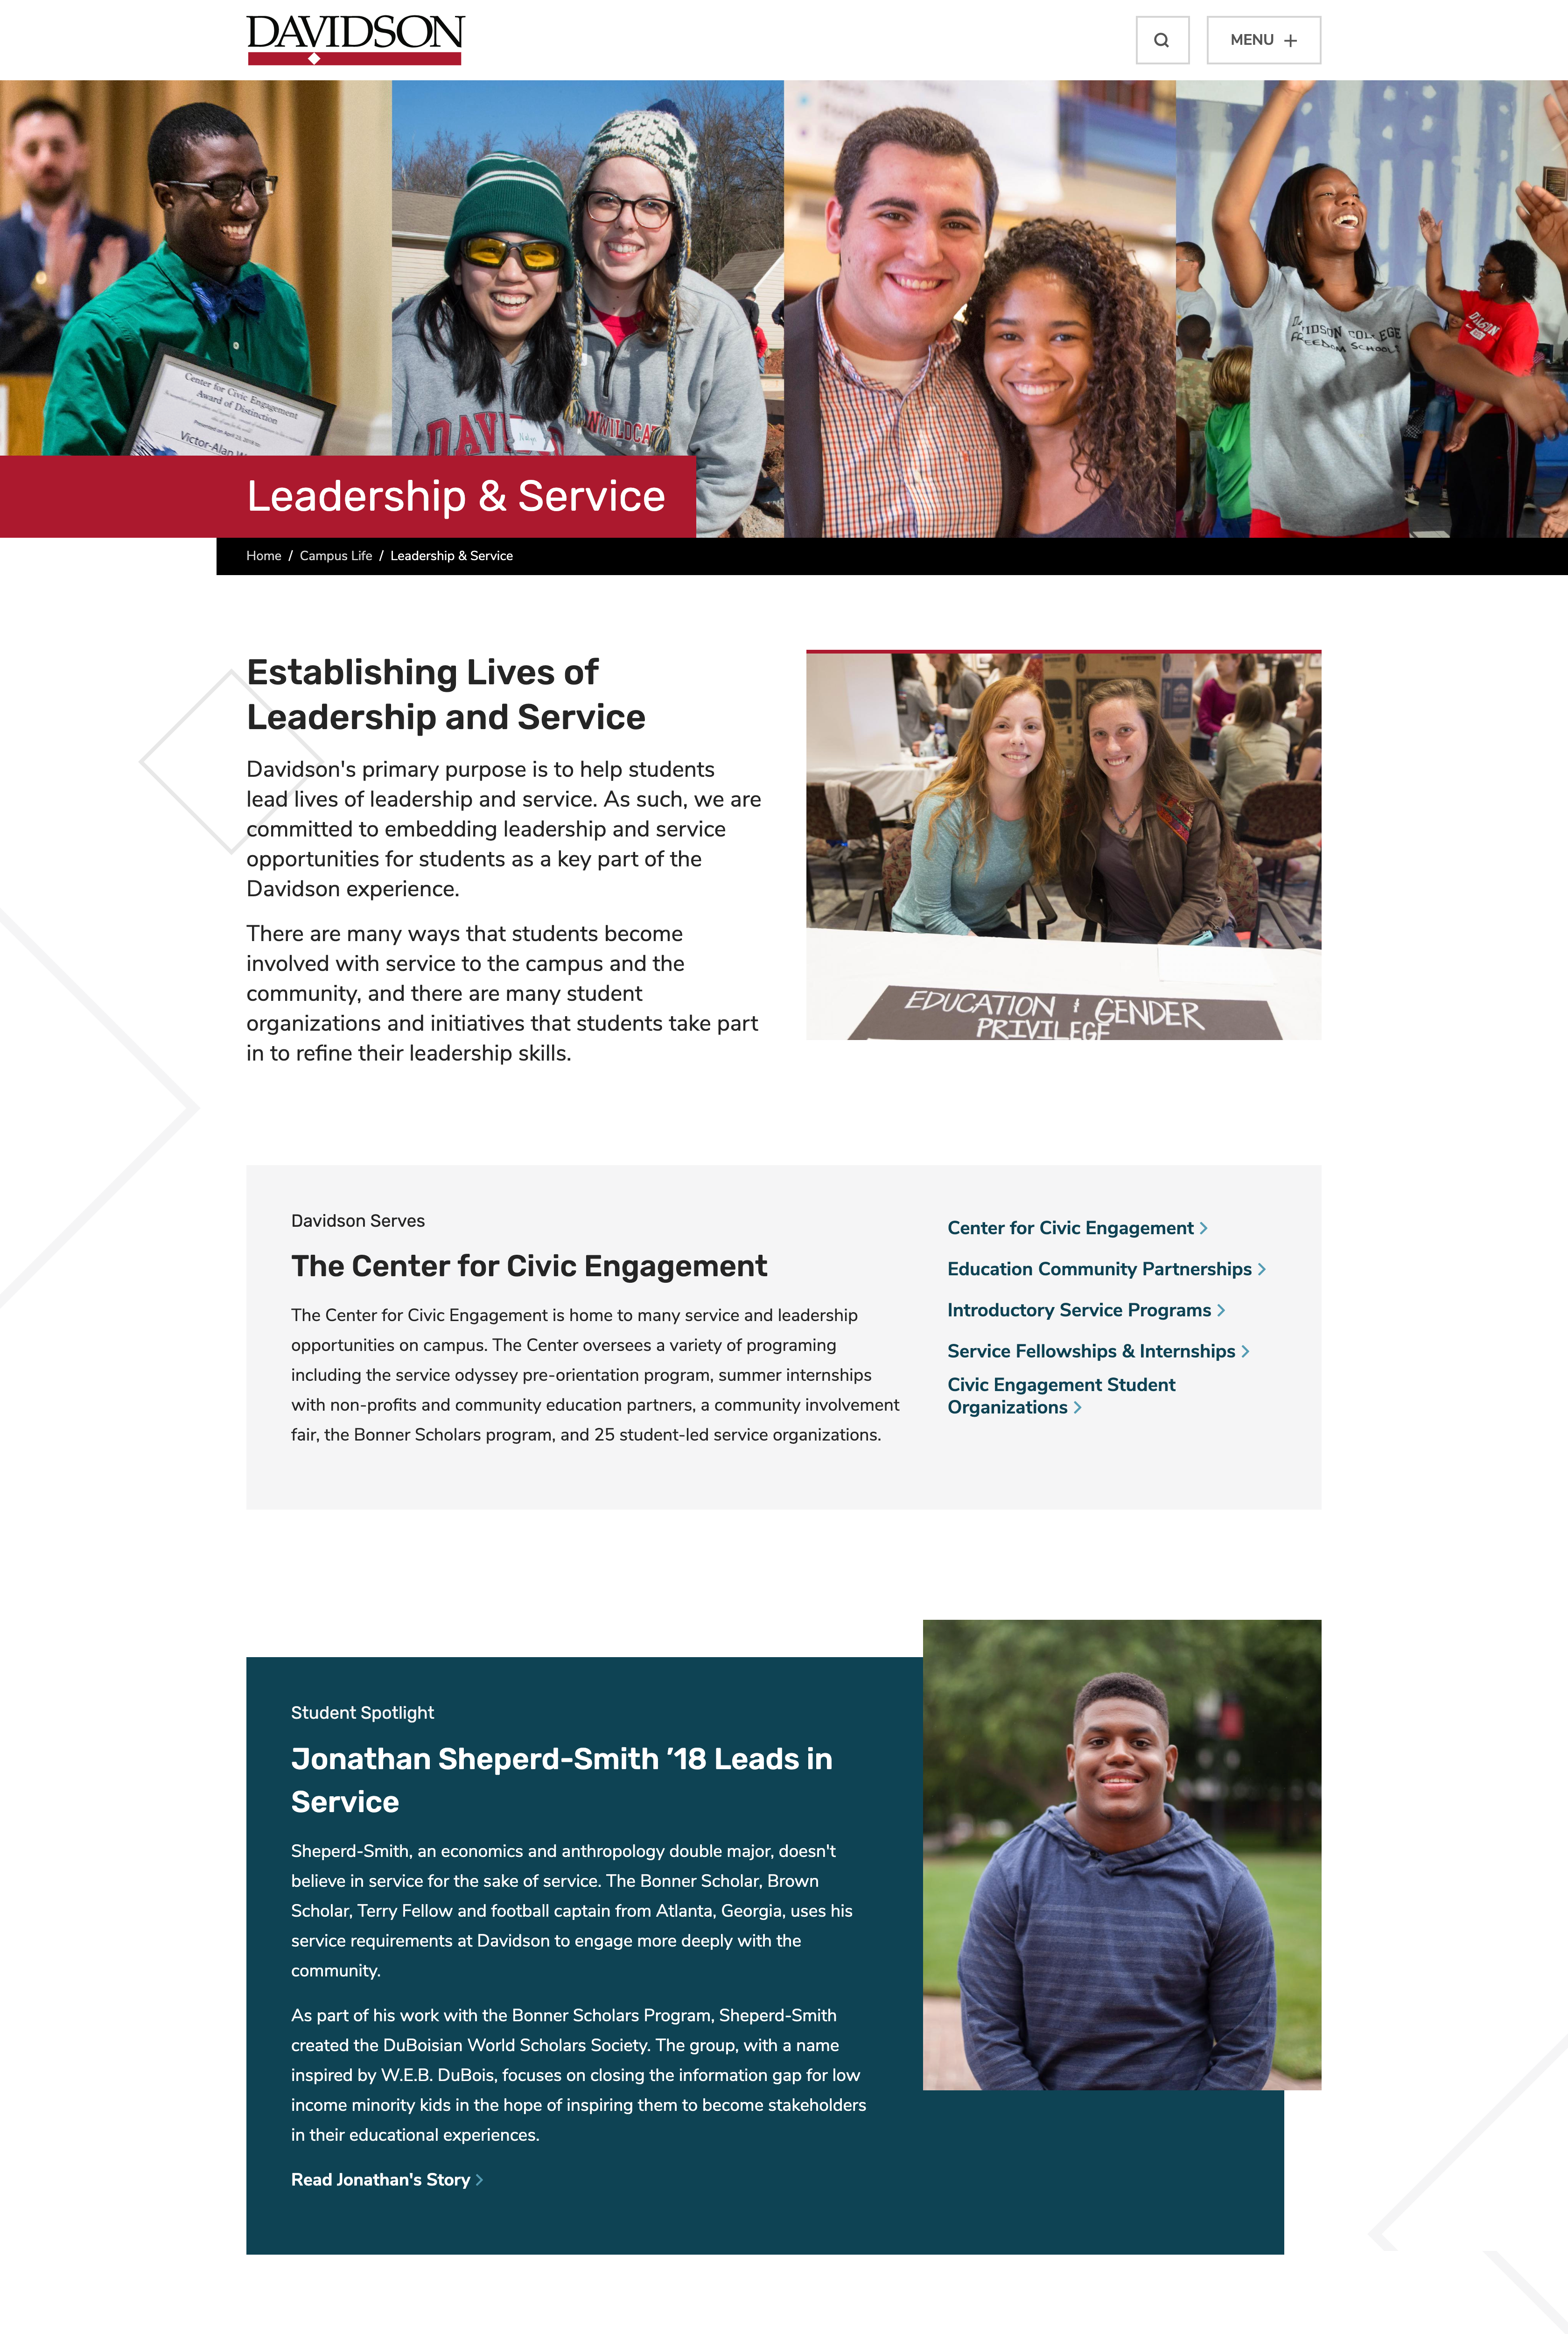 Screenshot of Leadership & Service page on Davidson.edu